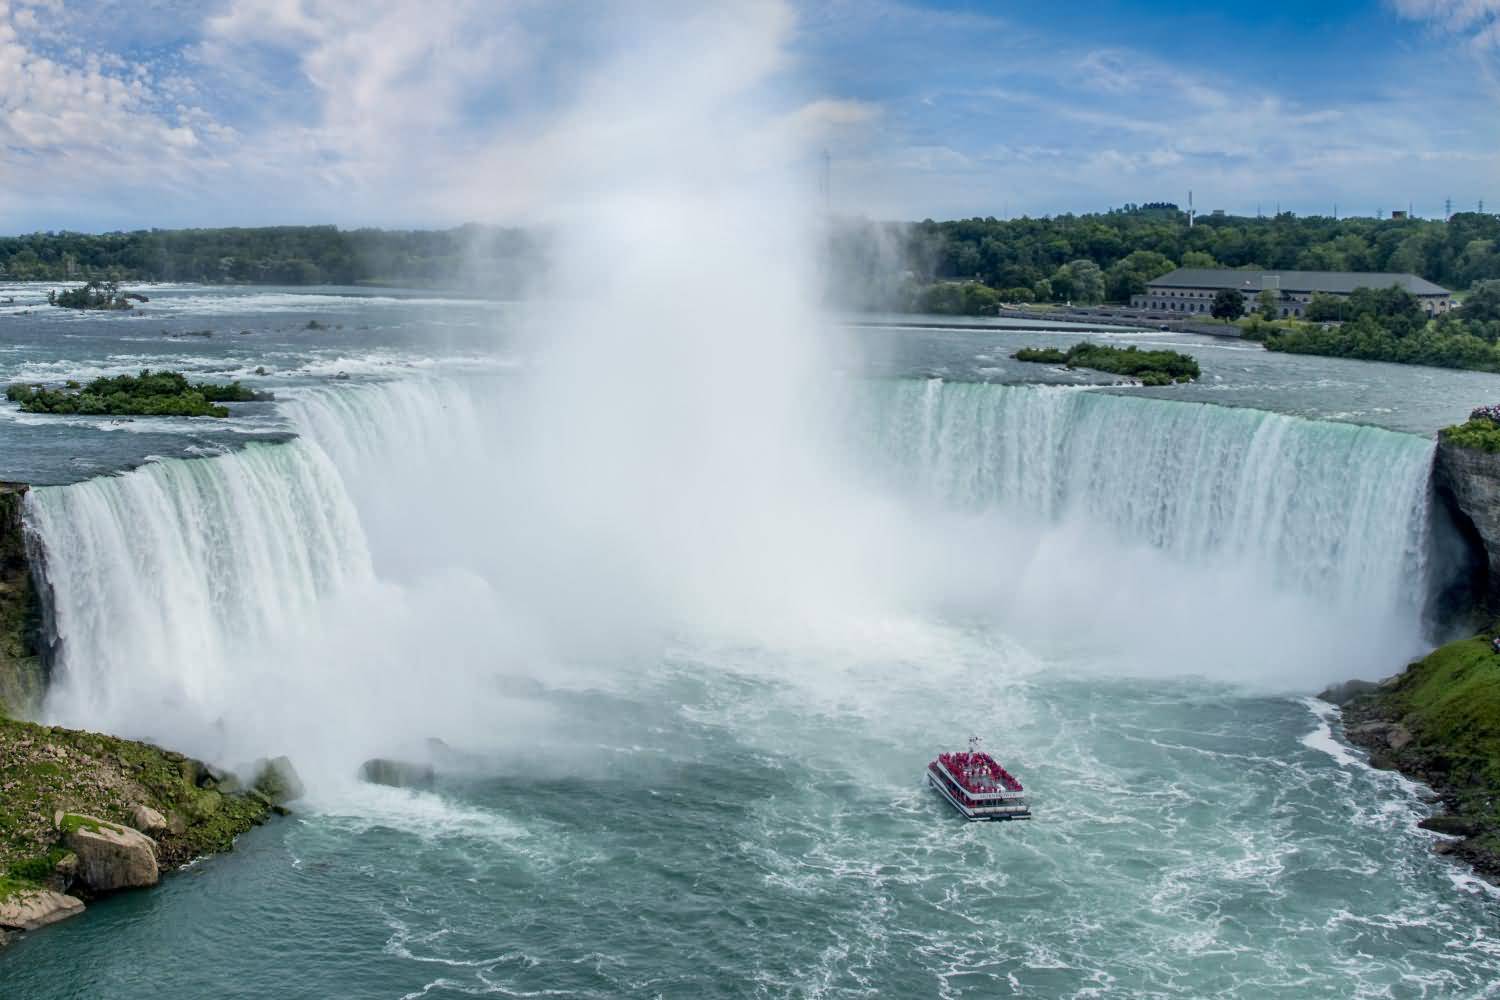 Beautiful Image Of The Niagara Falls